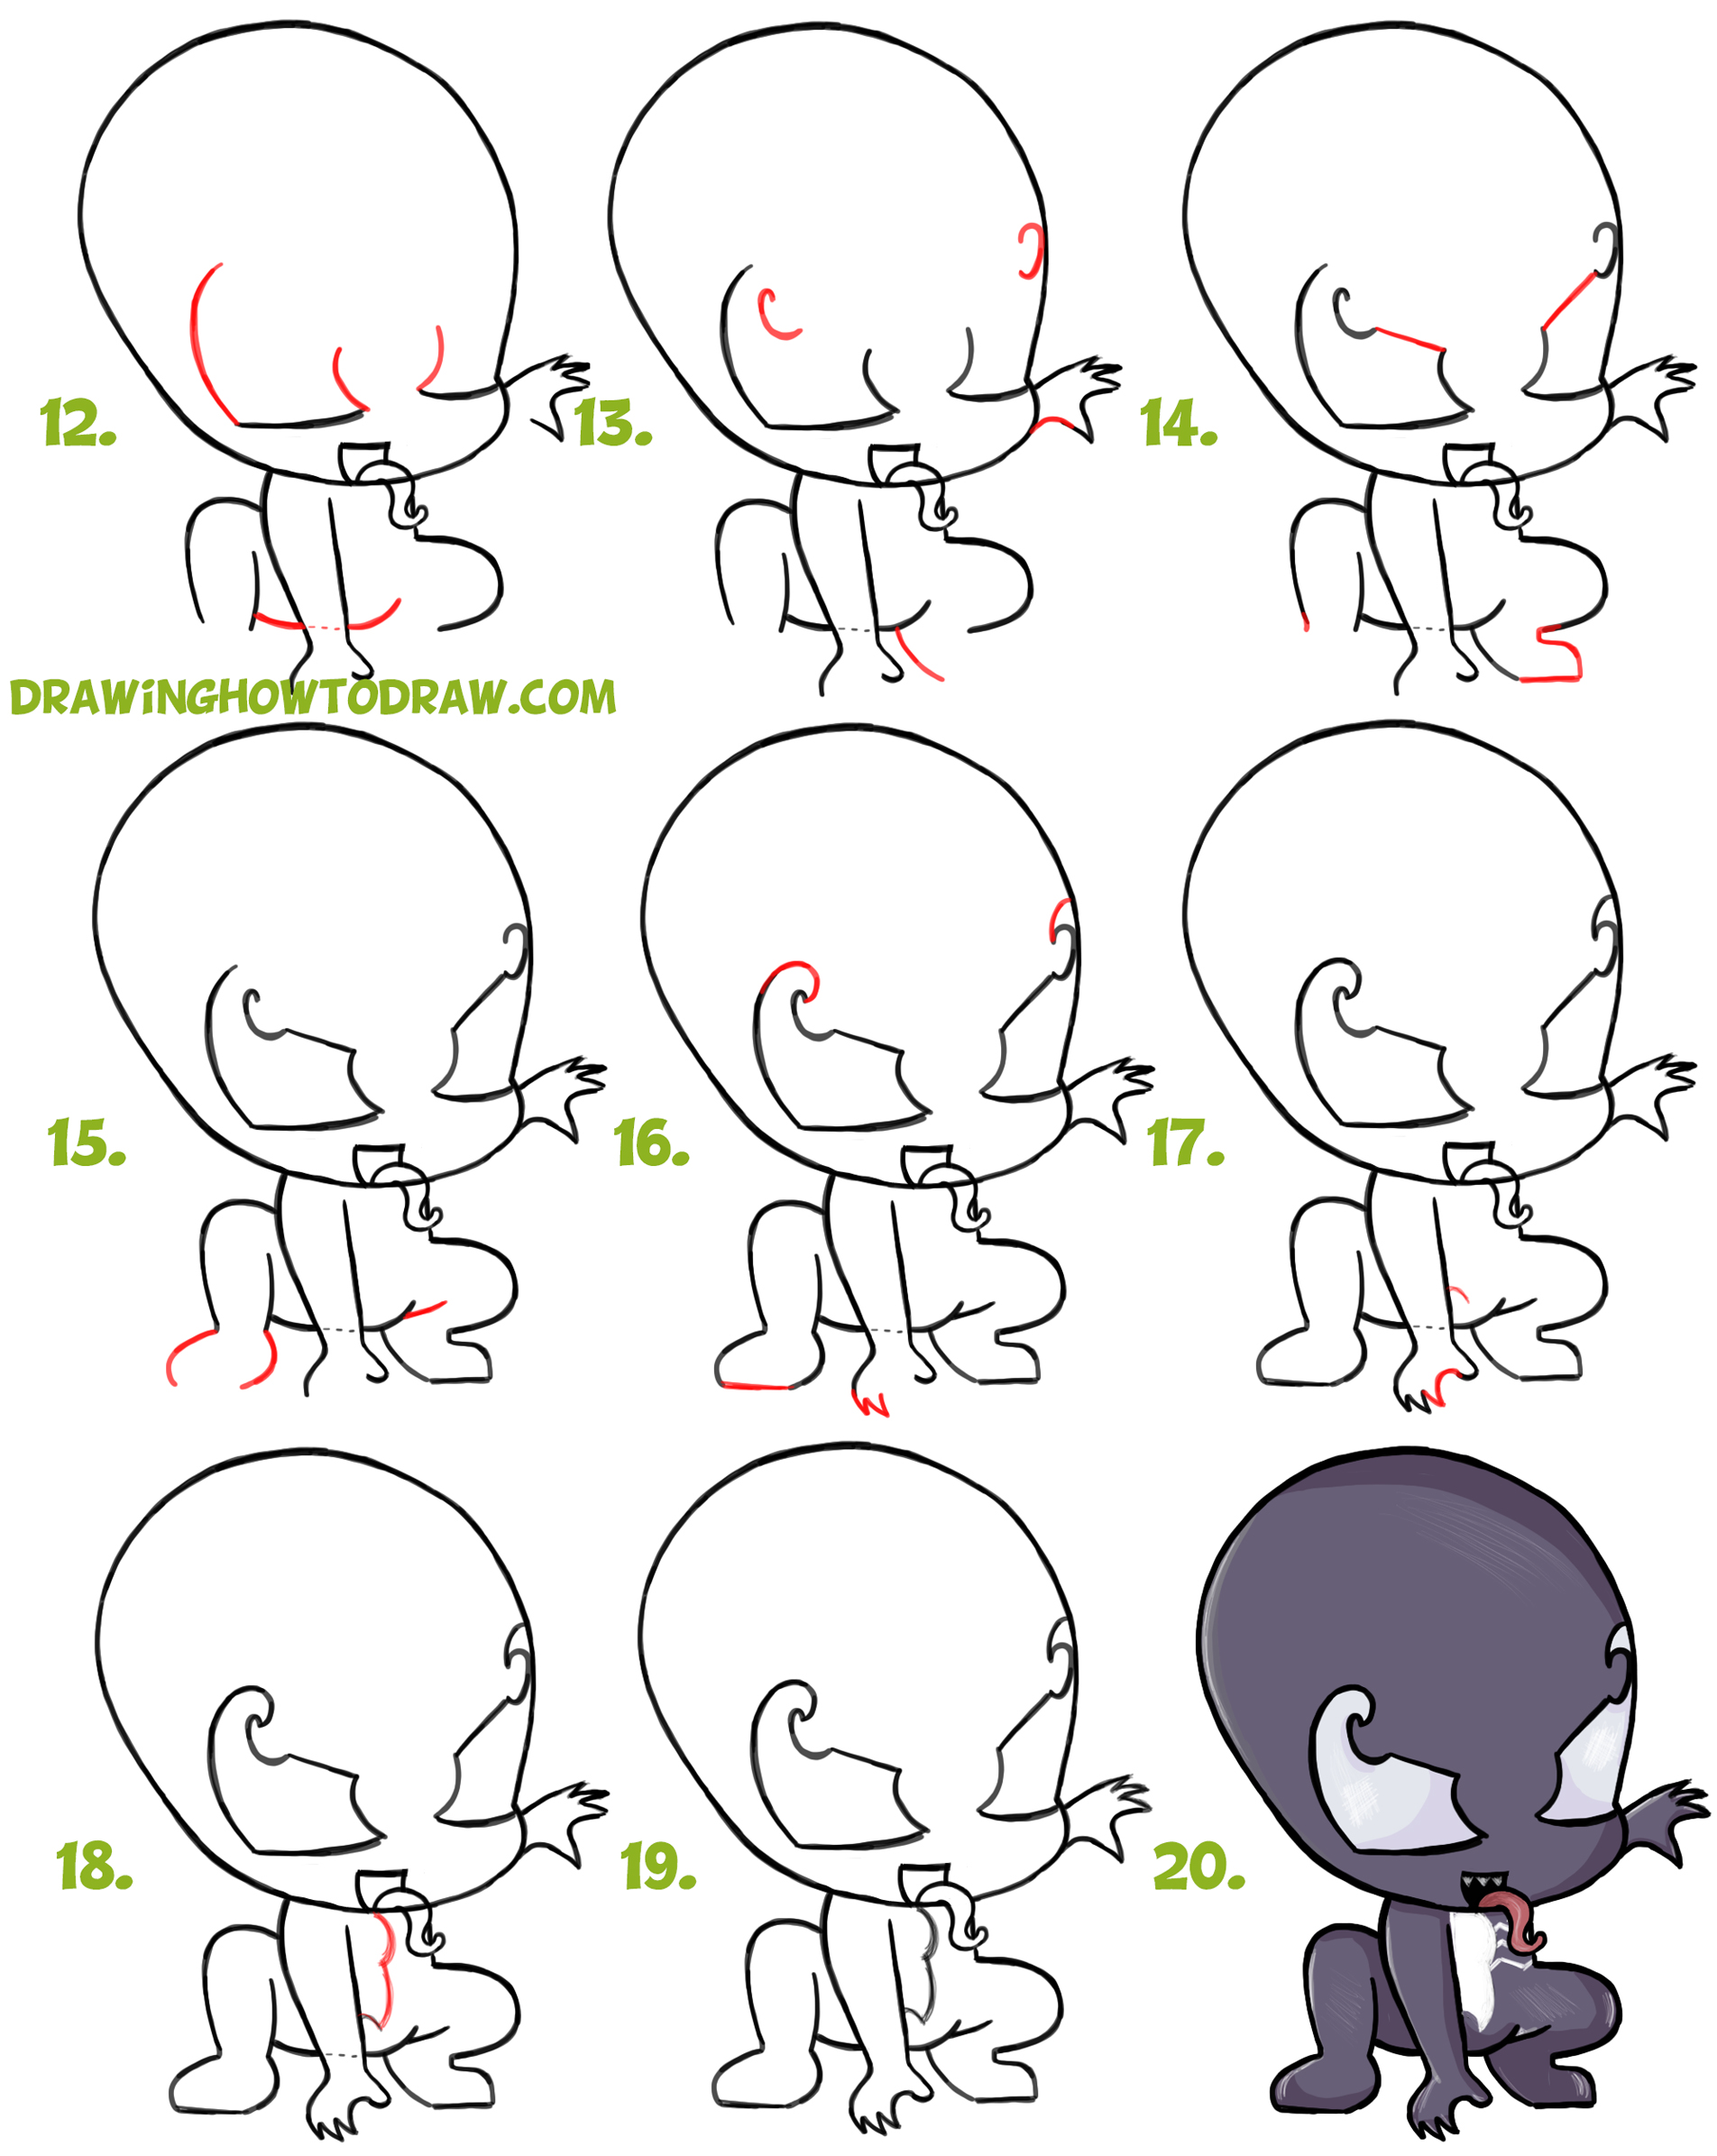 How To Draw Venom | Step By Step | Marvel - YouTube